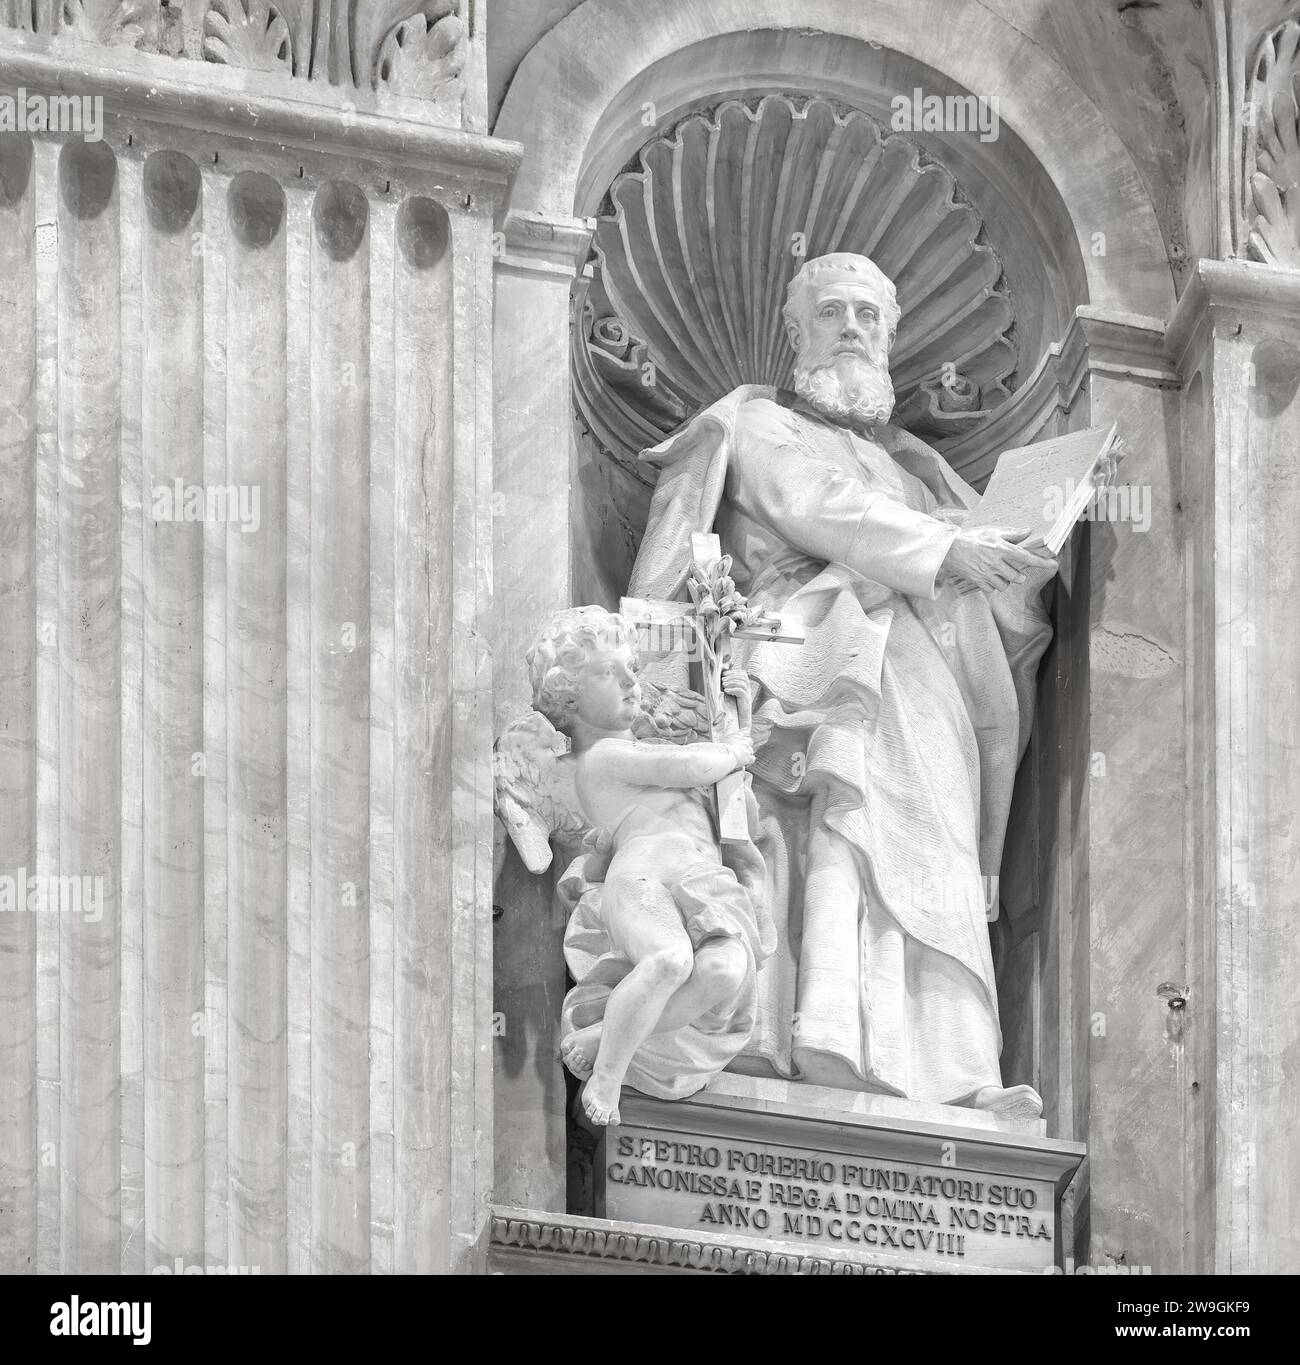 Statue des hl. Peter Fourier im Petersdom, Vatikan, Rom, Italien. Stockfoto